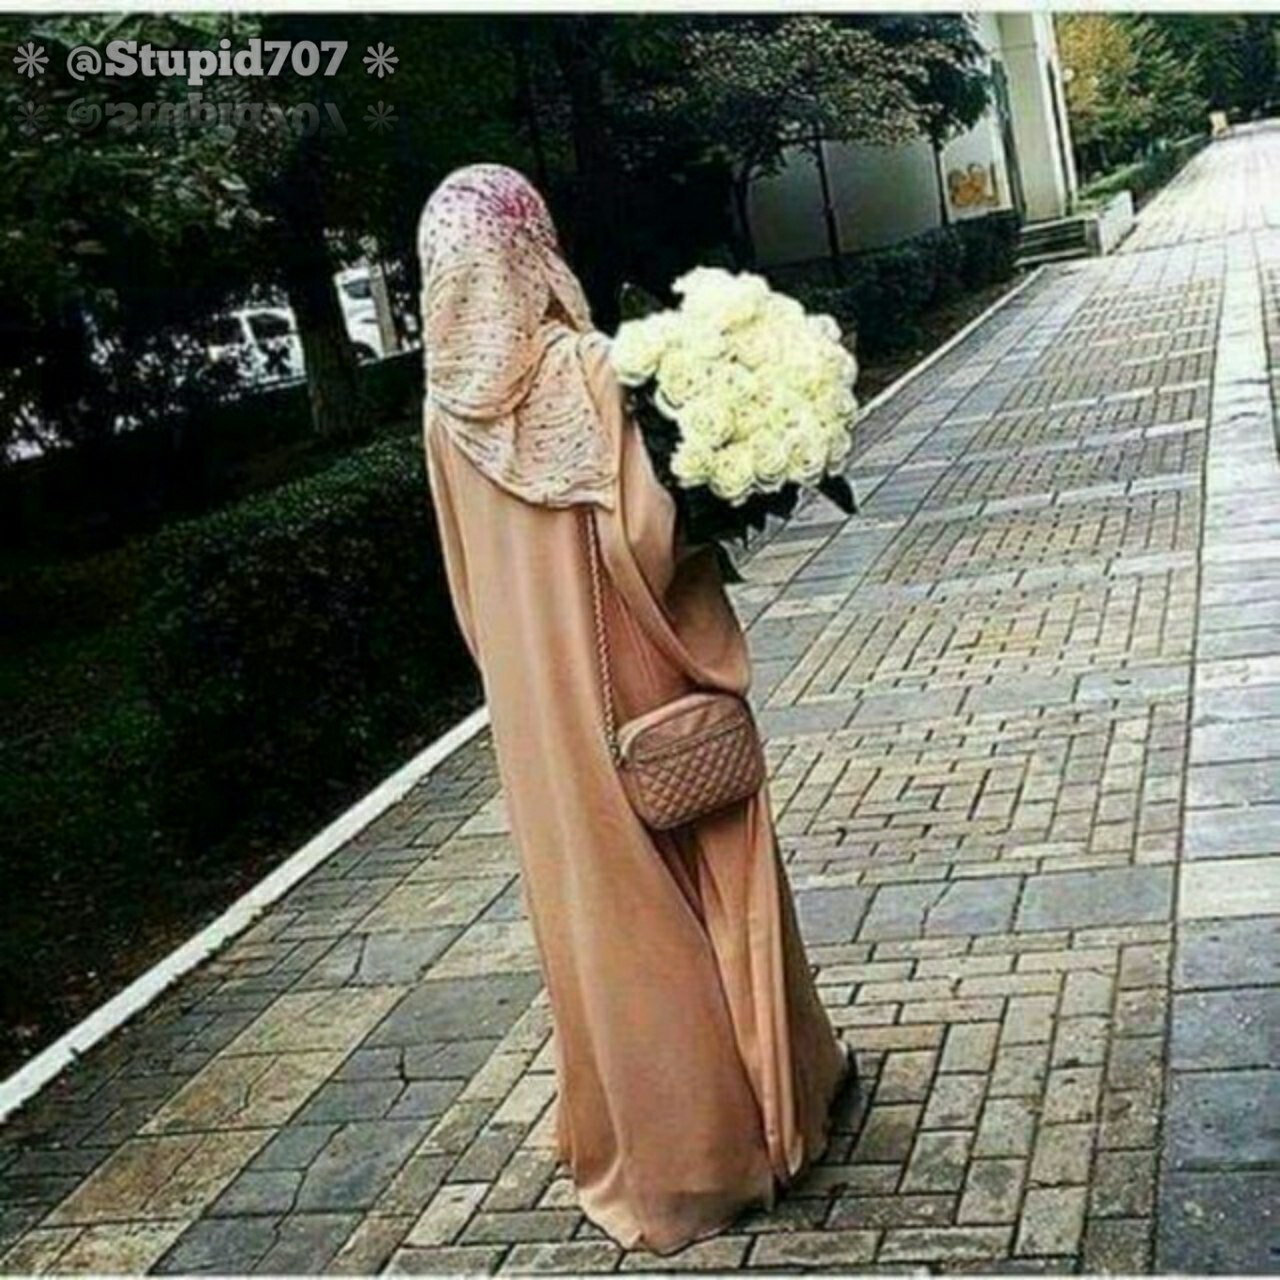 Мусульманка с букетом цветов